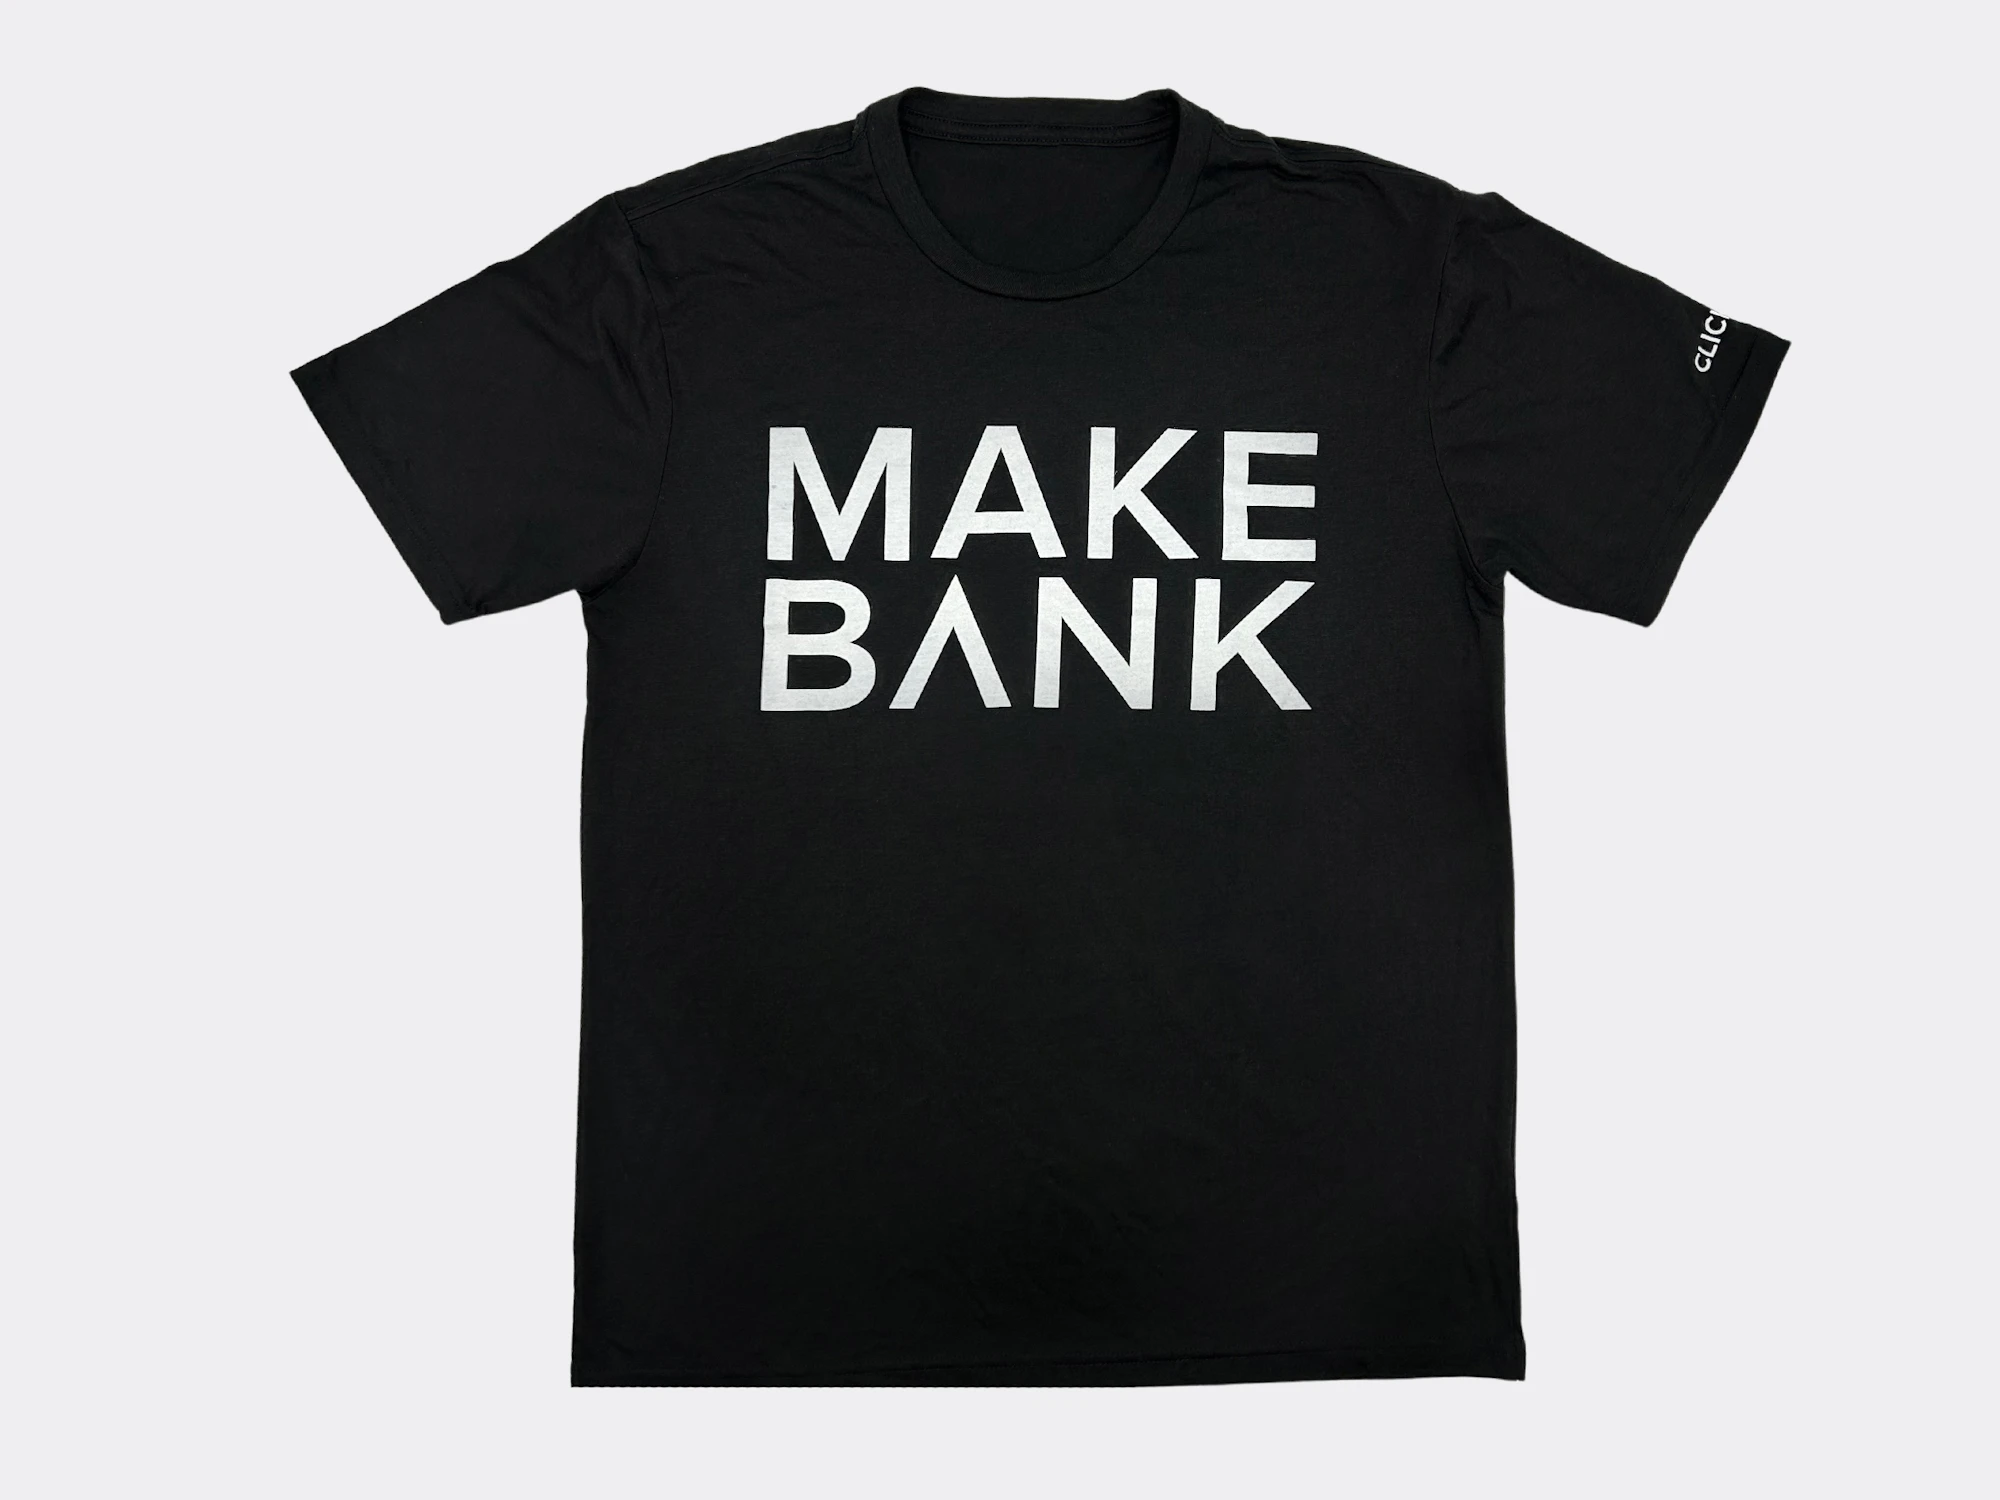 ClickBank Men's Black/White Make Bank Tee